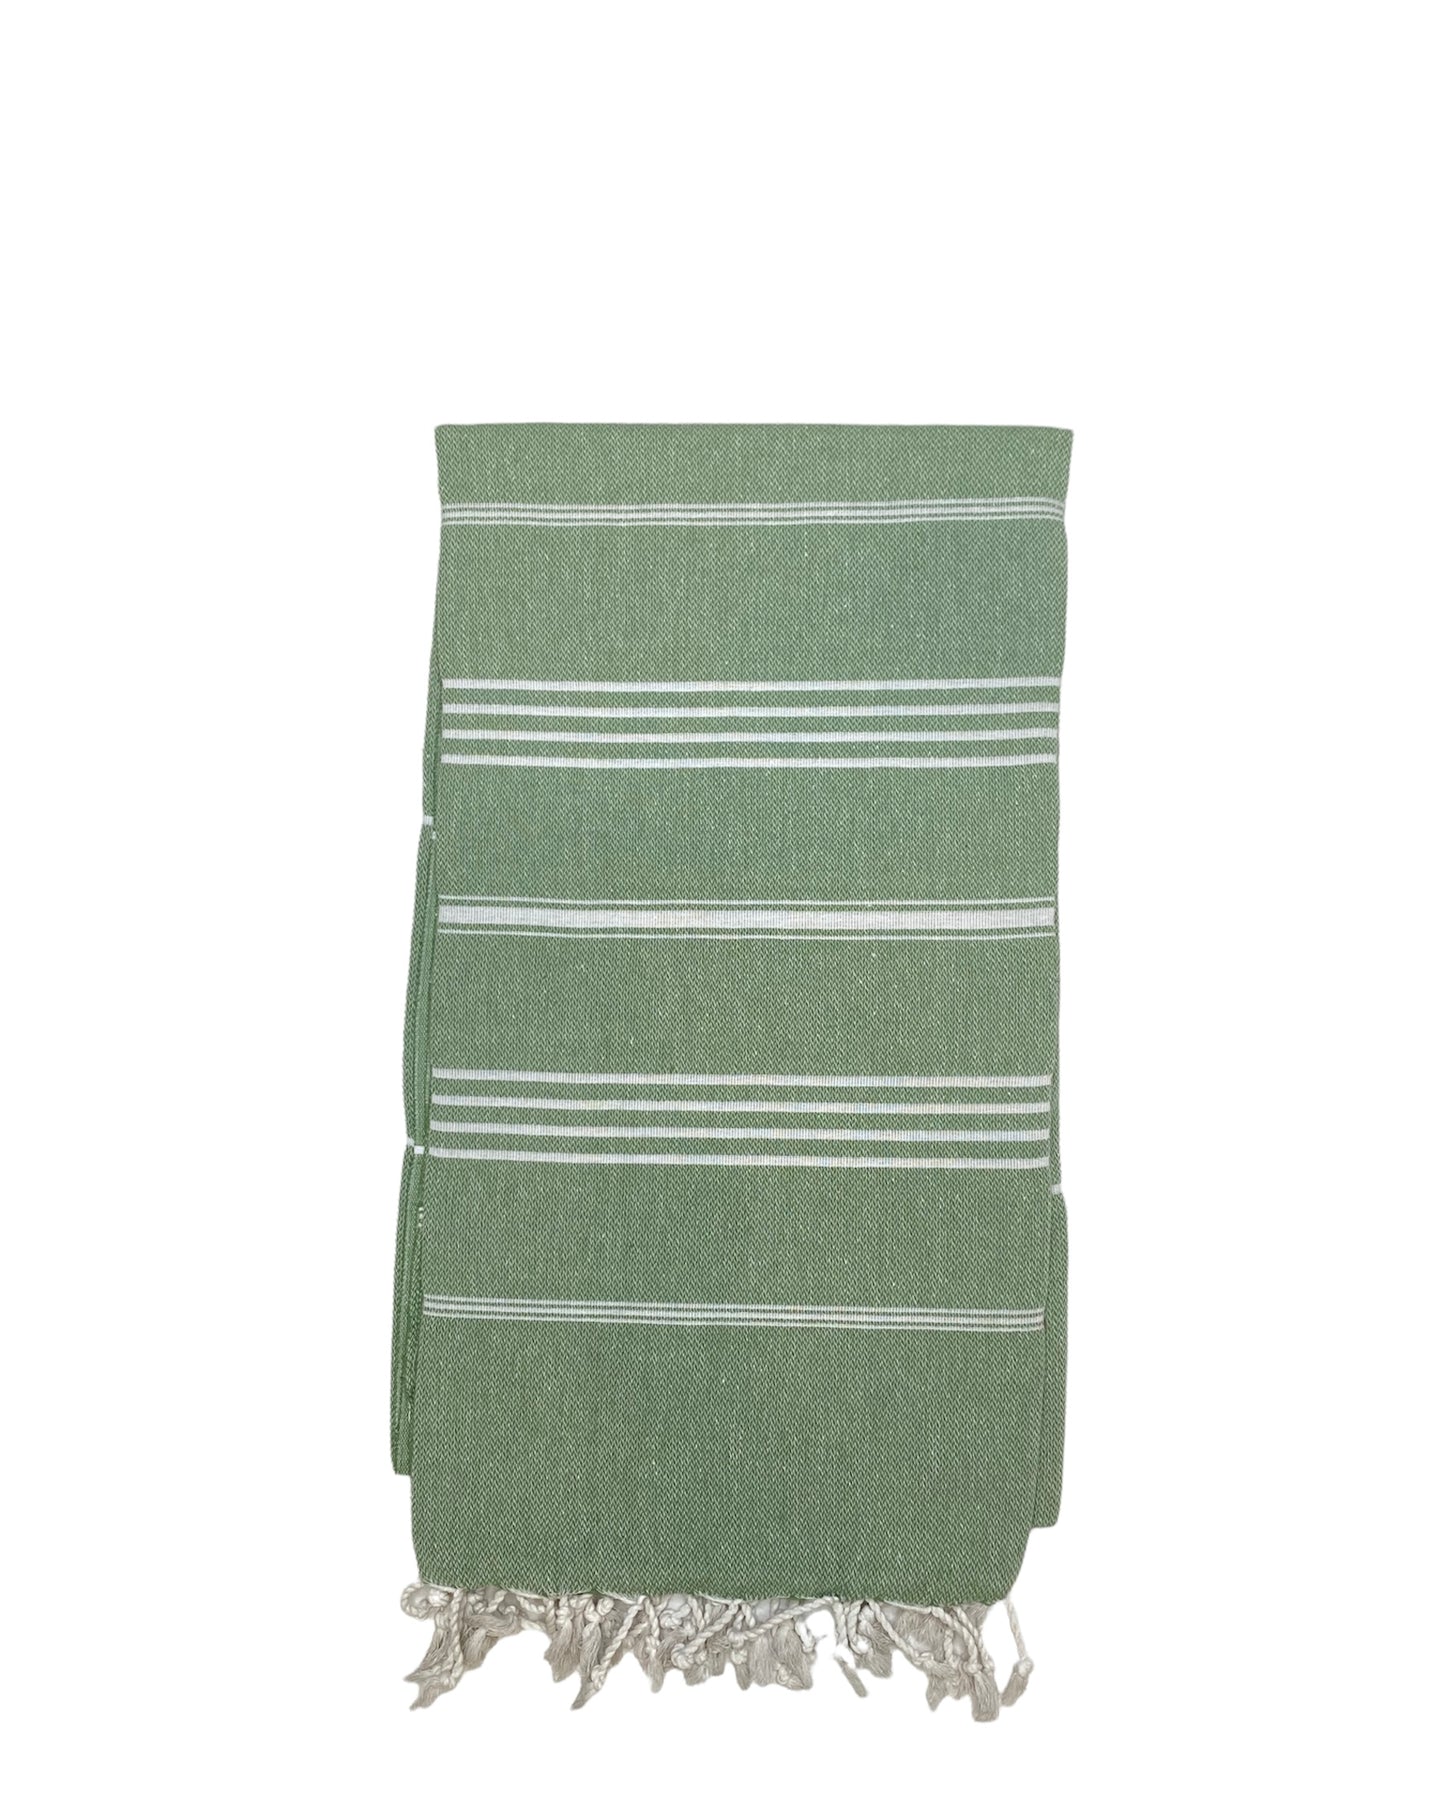 Olive Green Turkish Towel/Throw